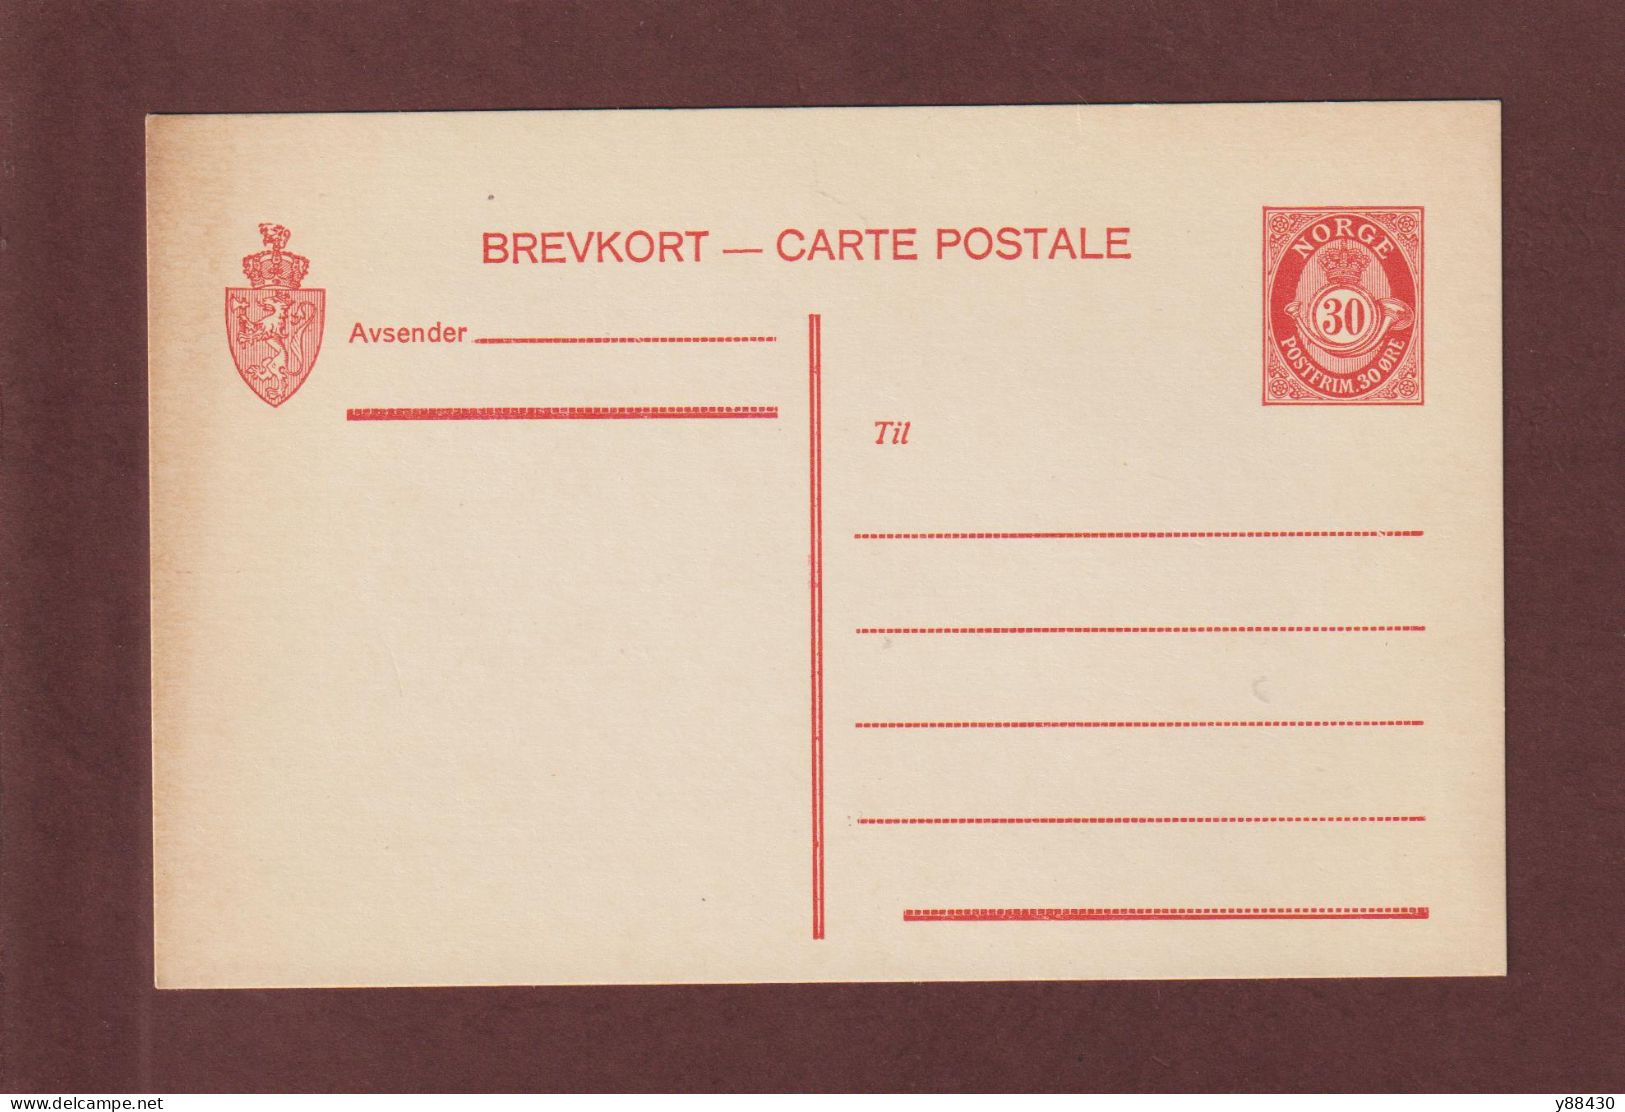 NORVÈGE - Entier Postal Neuf - 1910/1930 - Carte Postale - Cor - 30. Ø . Rouge  - 2 Scan - Ganzsachen